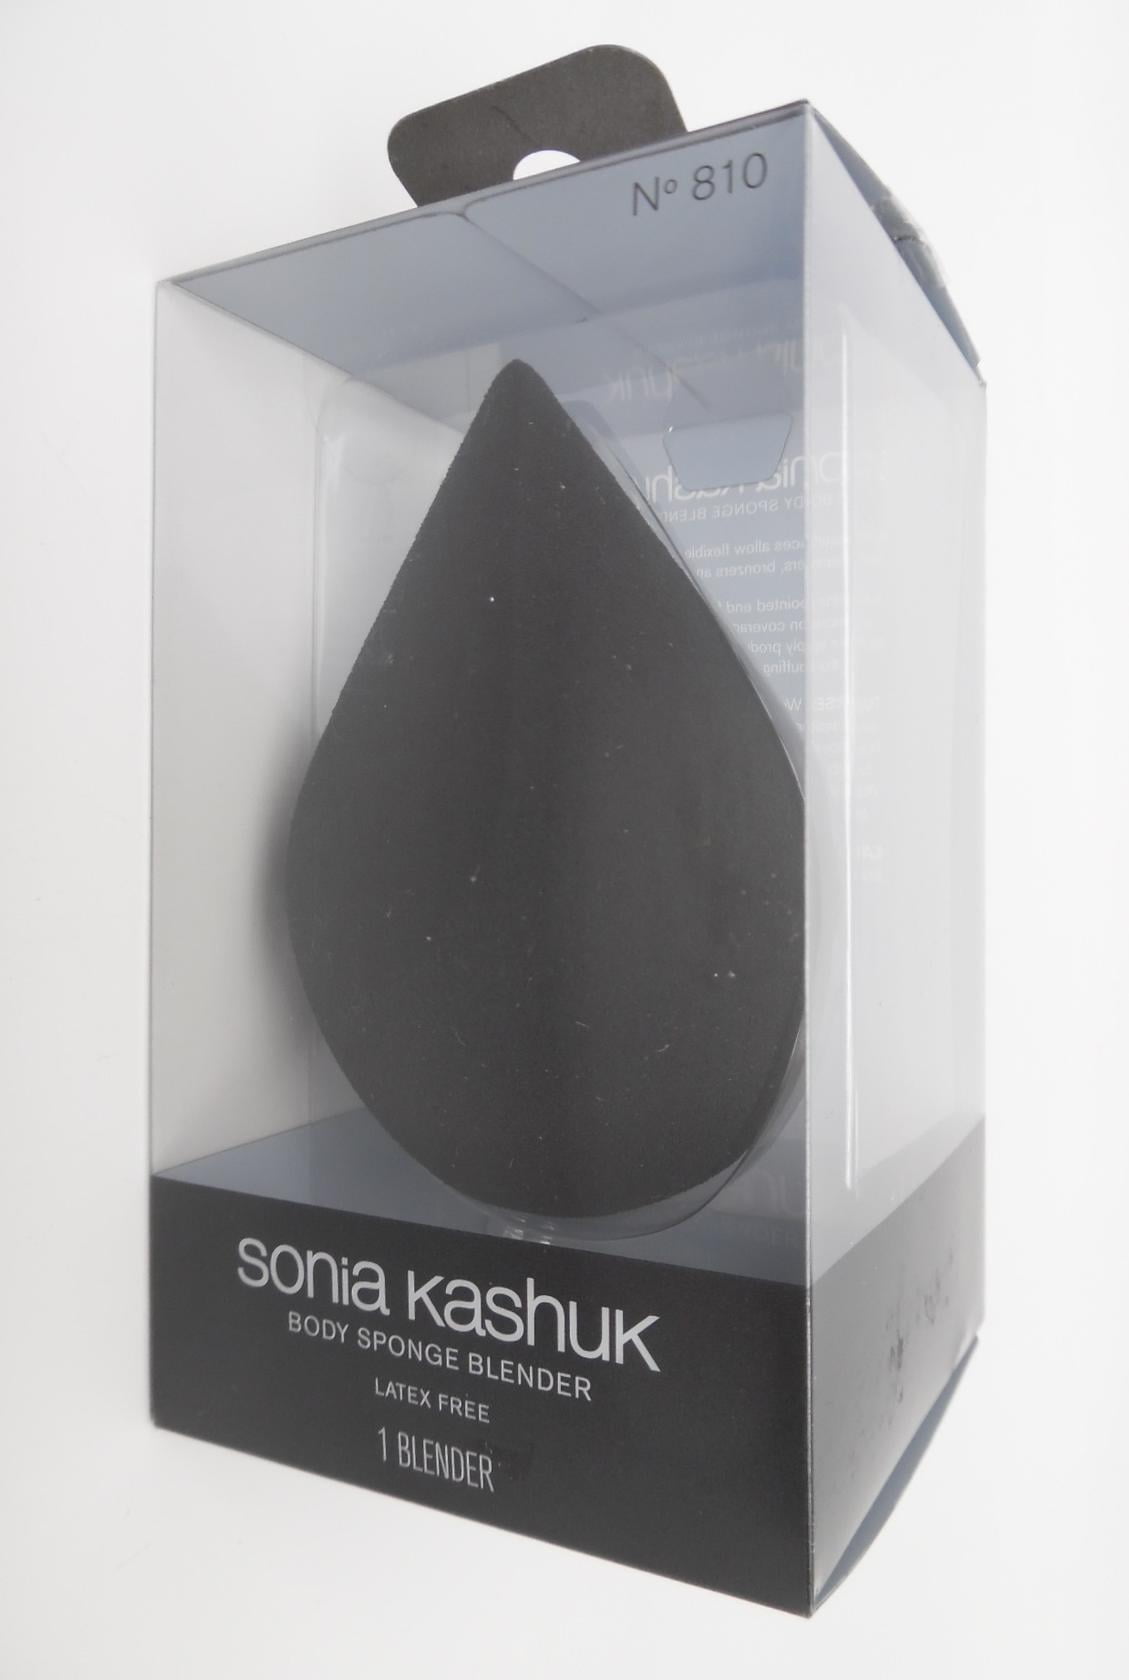 Sonia Kashuk Latex-Free Makeup Body Blender Sponge - No. 810 - - Walmart.com